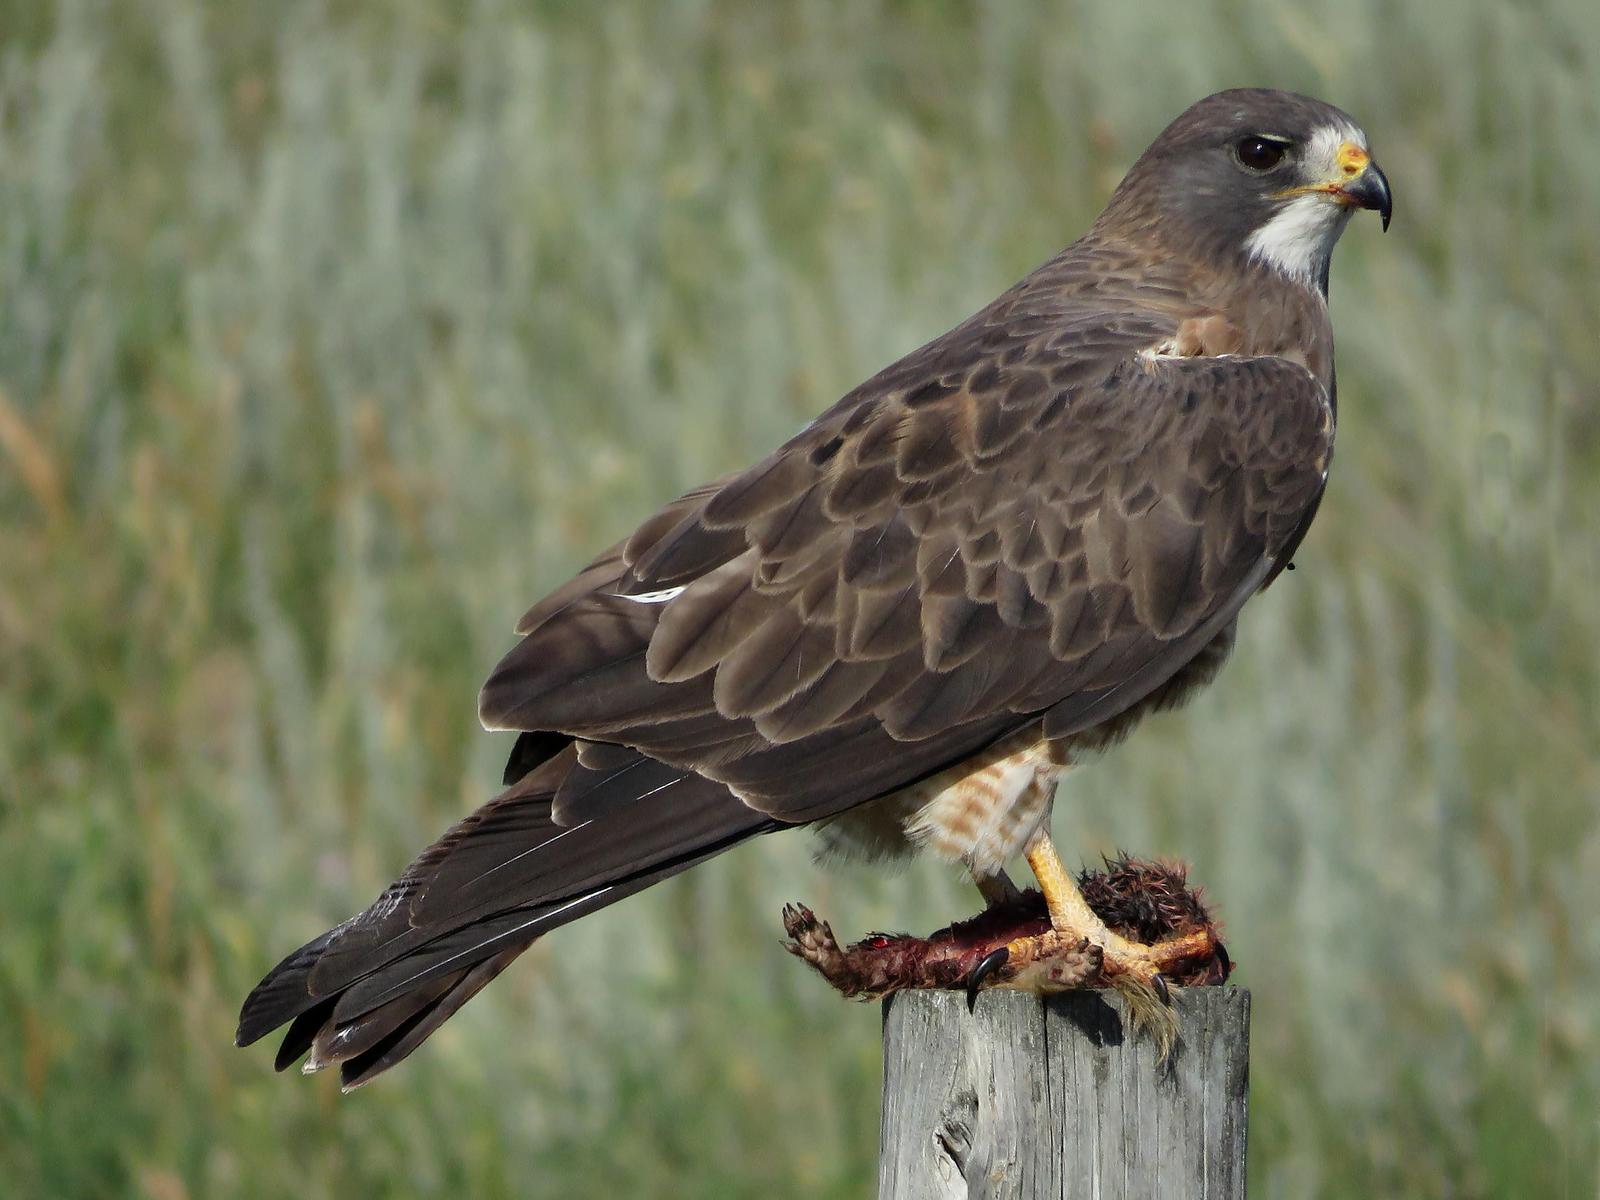 Swainson's Hawk Photo by Bob Neugebauer